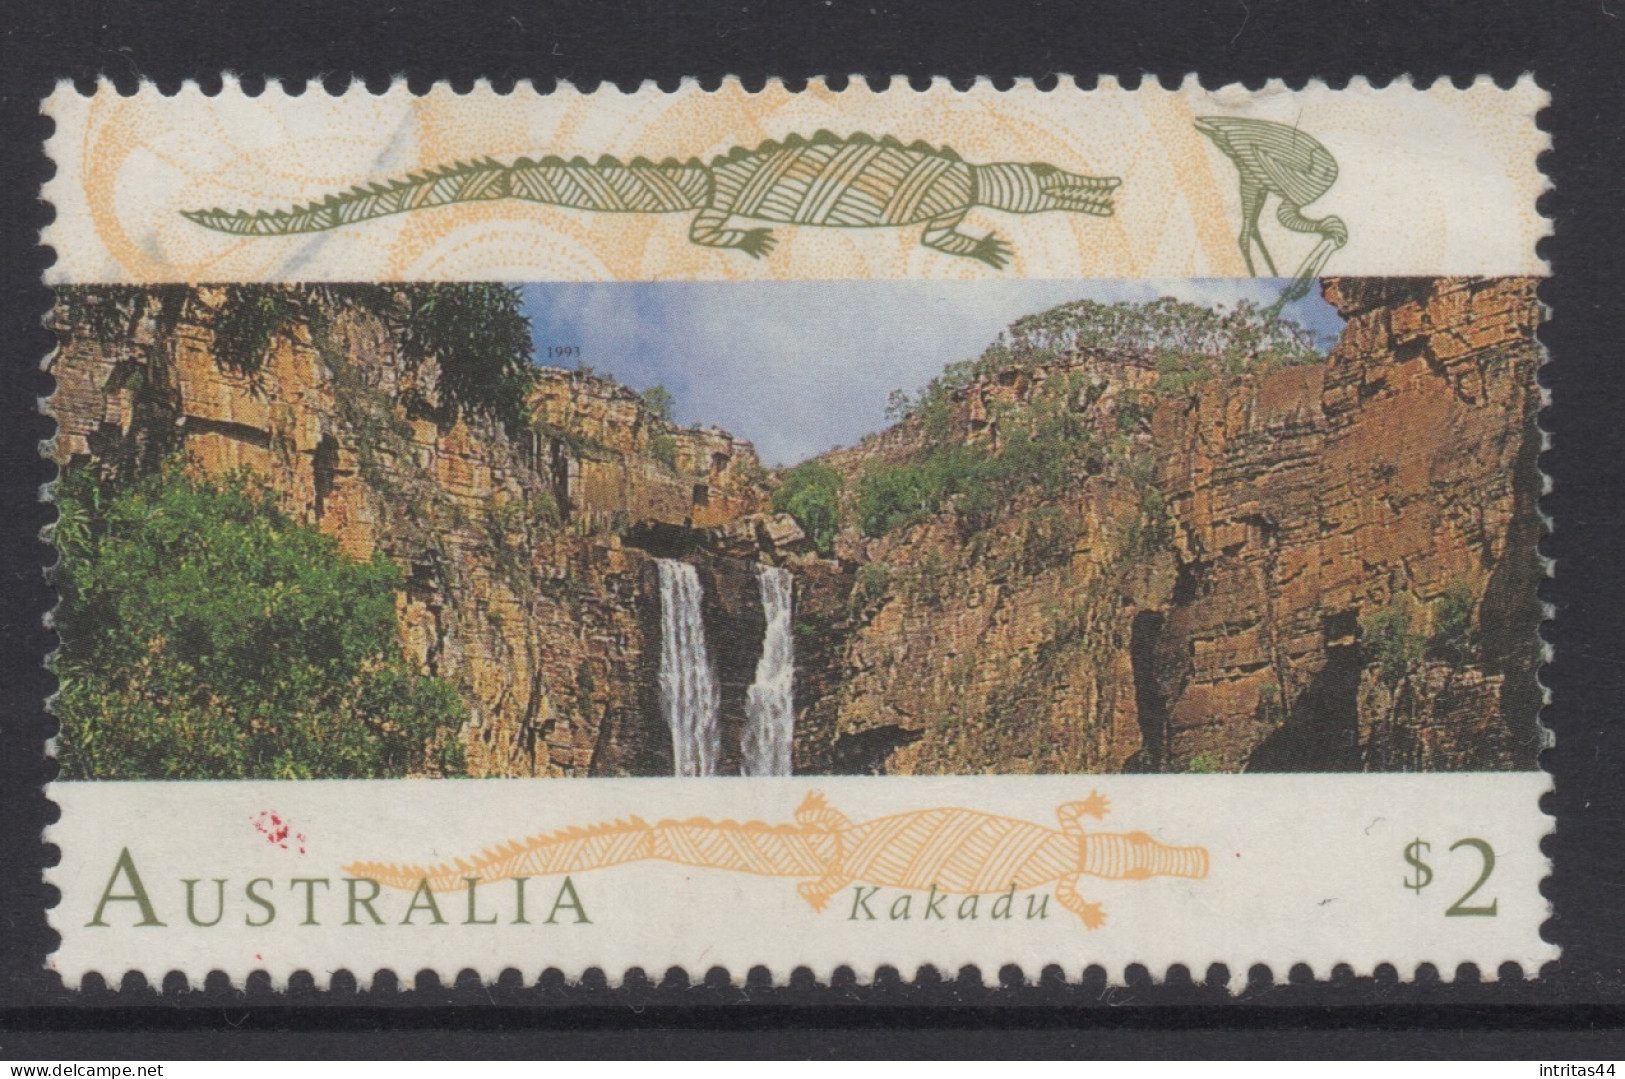 AUSTRALIA 1993 WORLD HERITAGE SITES (1st SERIES) " $2.00 WATERFALL, KAKADU "STAMP VFU. - Usados